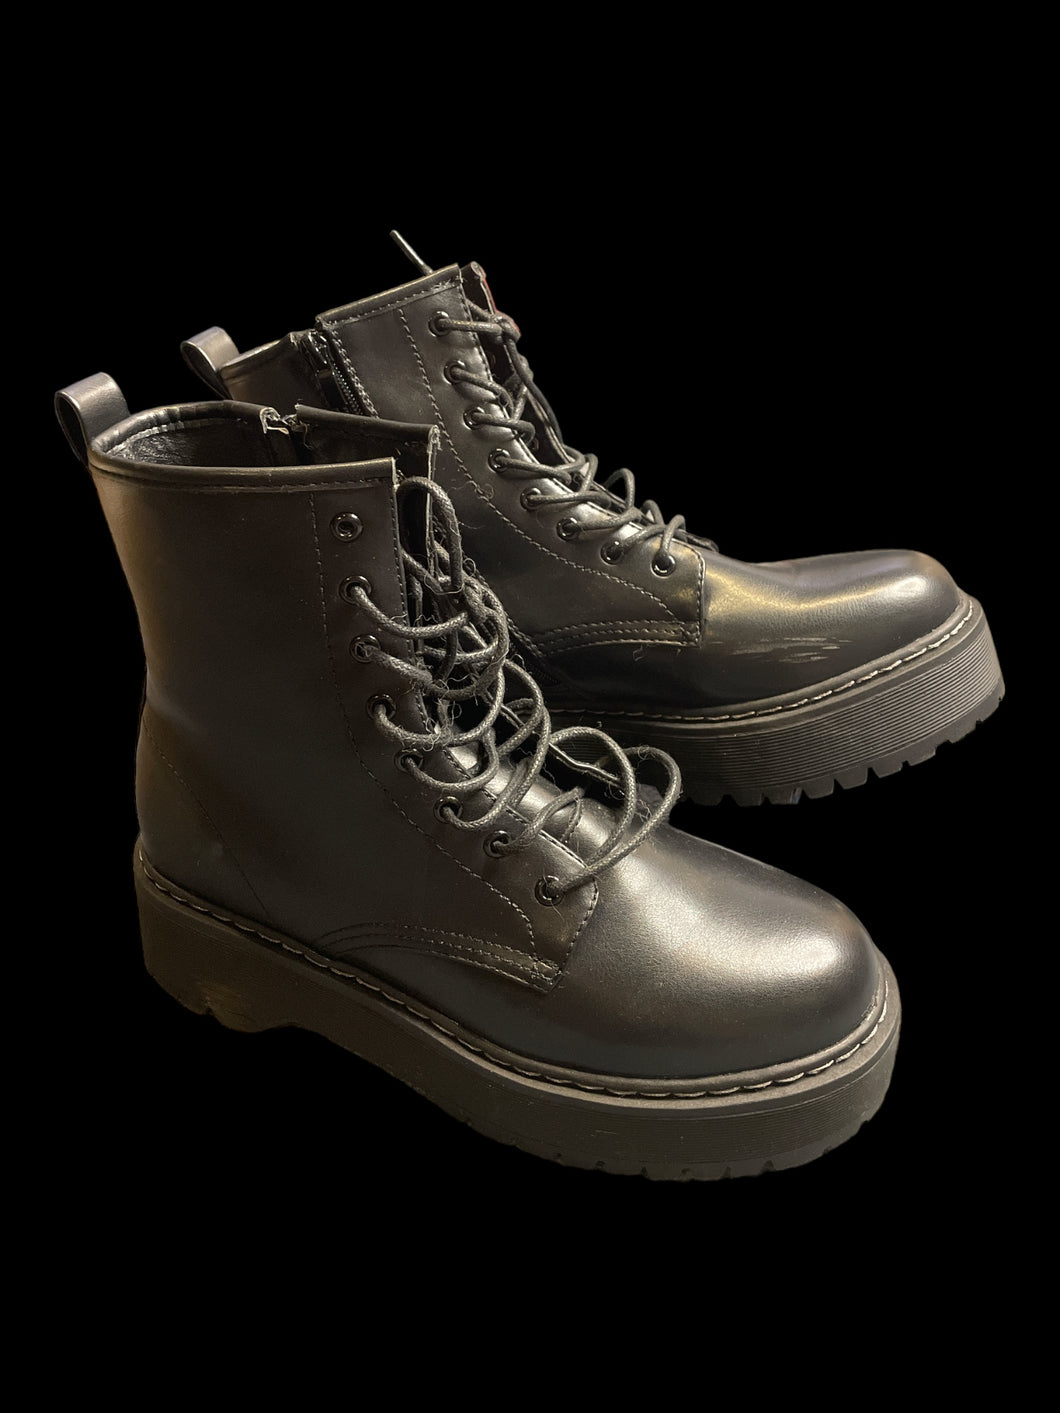 8.5M/10W Black pleather combat boots in box w/ lace-up & zipper closure